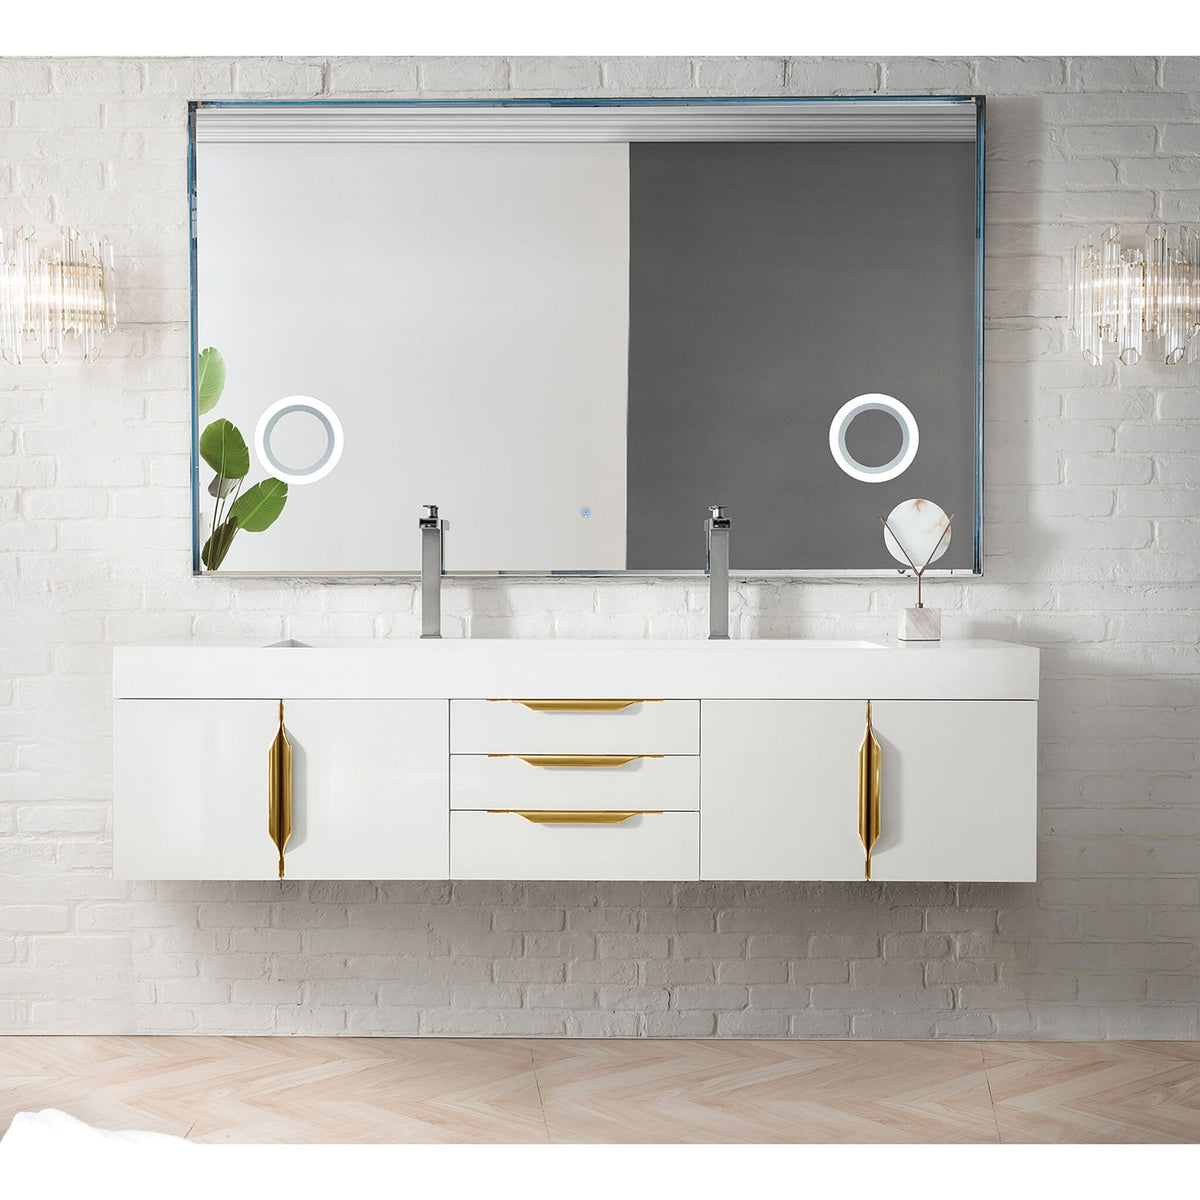 72" Mercer Island Double Bathroom Vanity, Glossy White w/ Radiant Gold